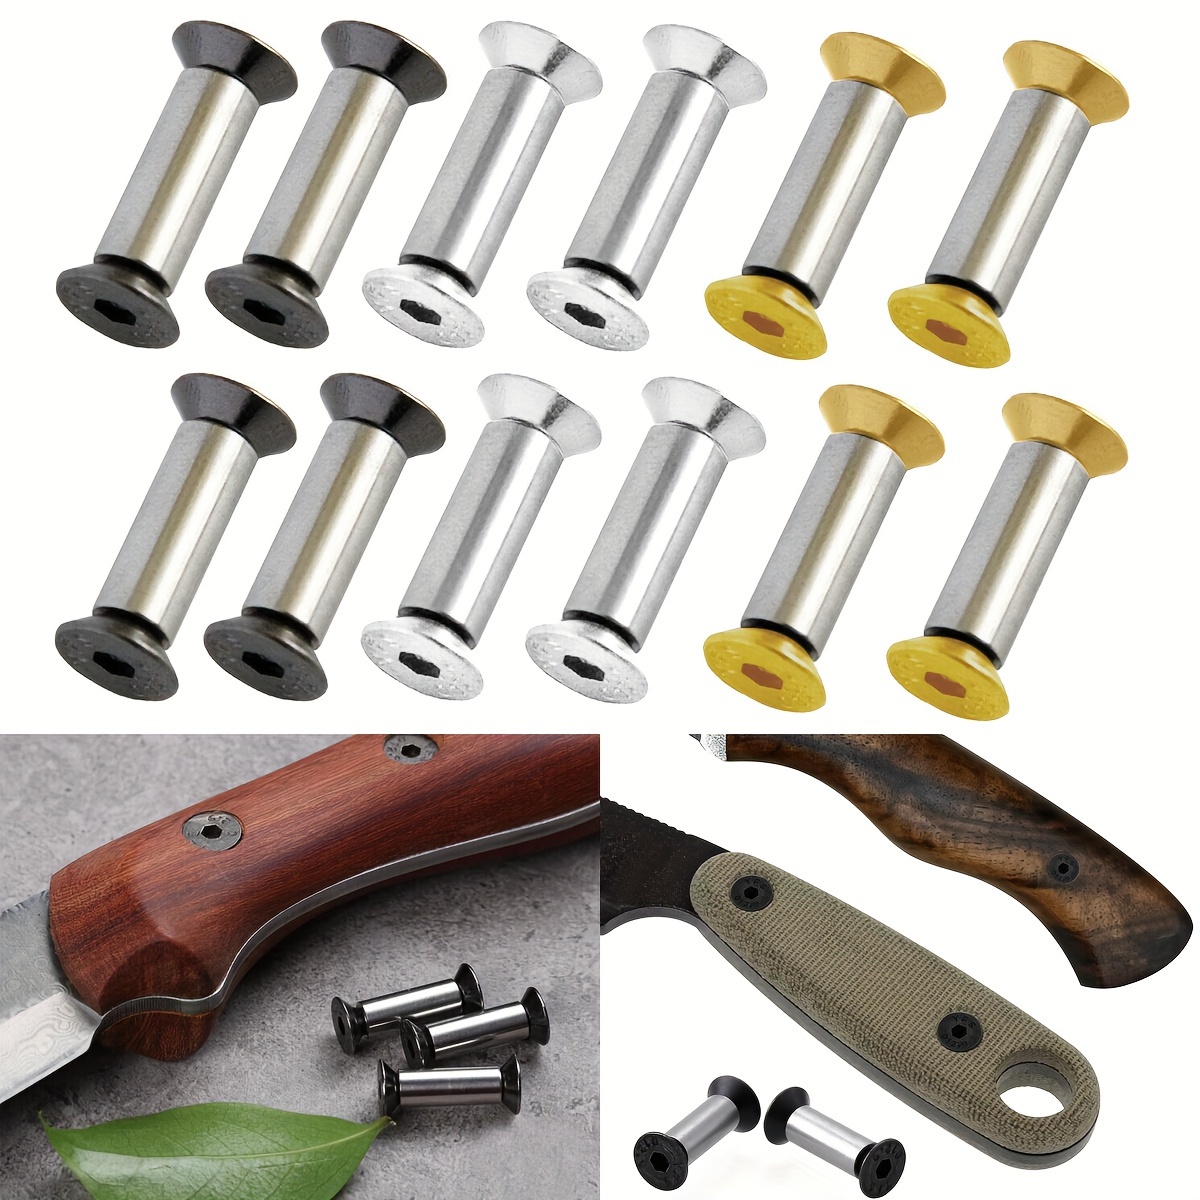 

6pcs Stainless Steel Knife Handle Fasteners, Socket Head Nut & Bolt Sets, Rivet Screws For Blade Fixing, Knife Making Hardware Diy Materials